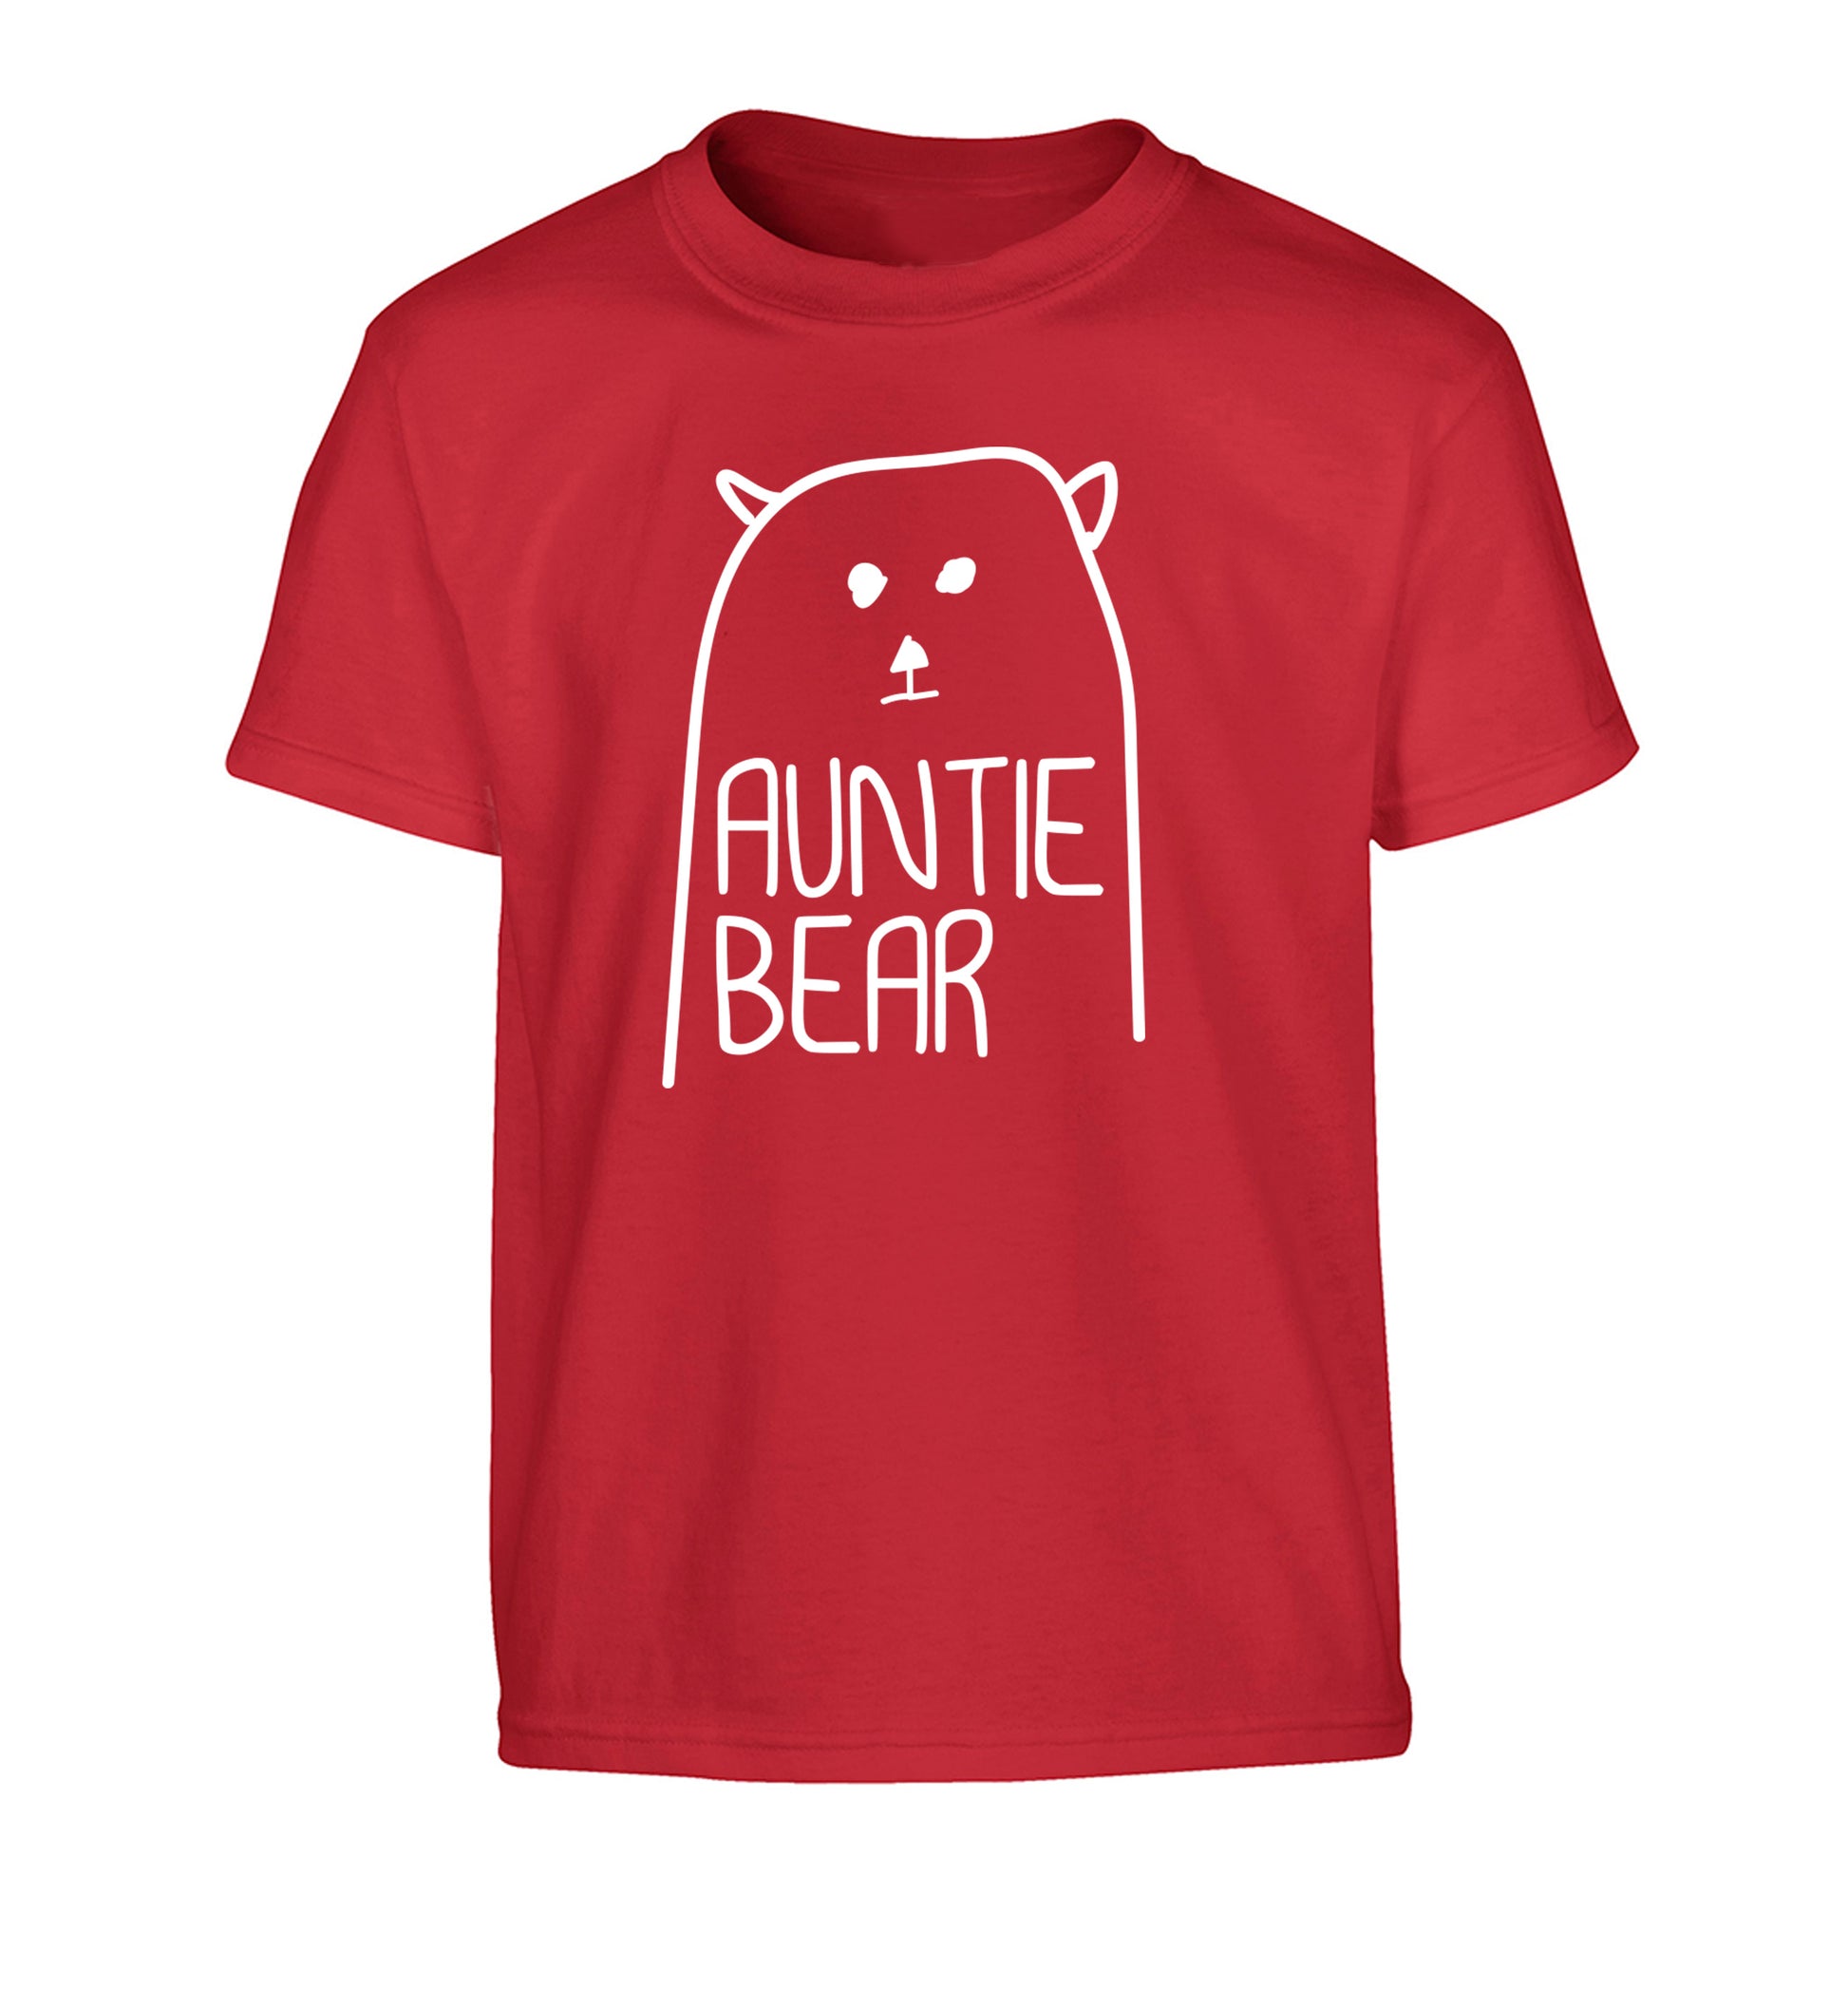 Auntie bear Children's red Tshirt 12-13 Years